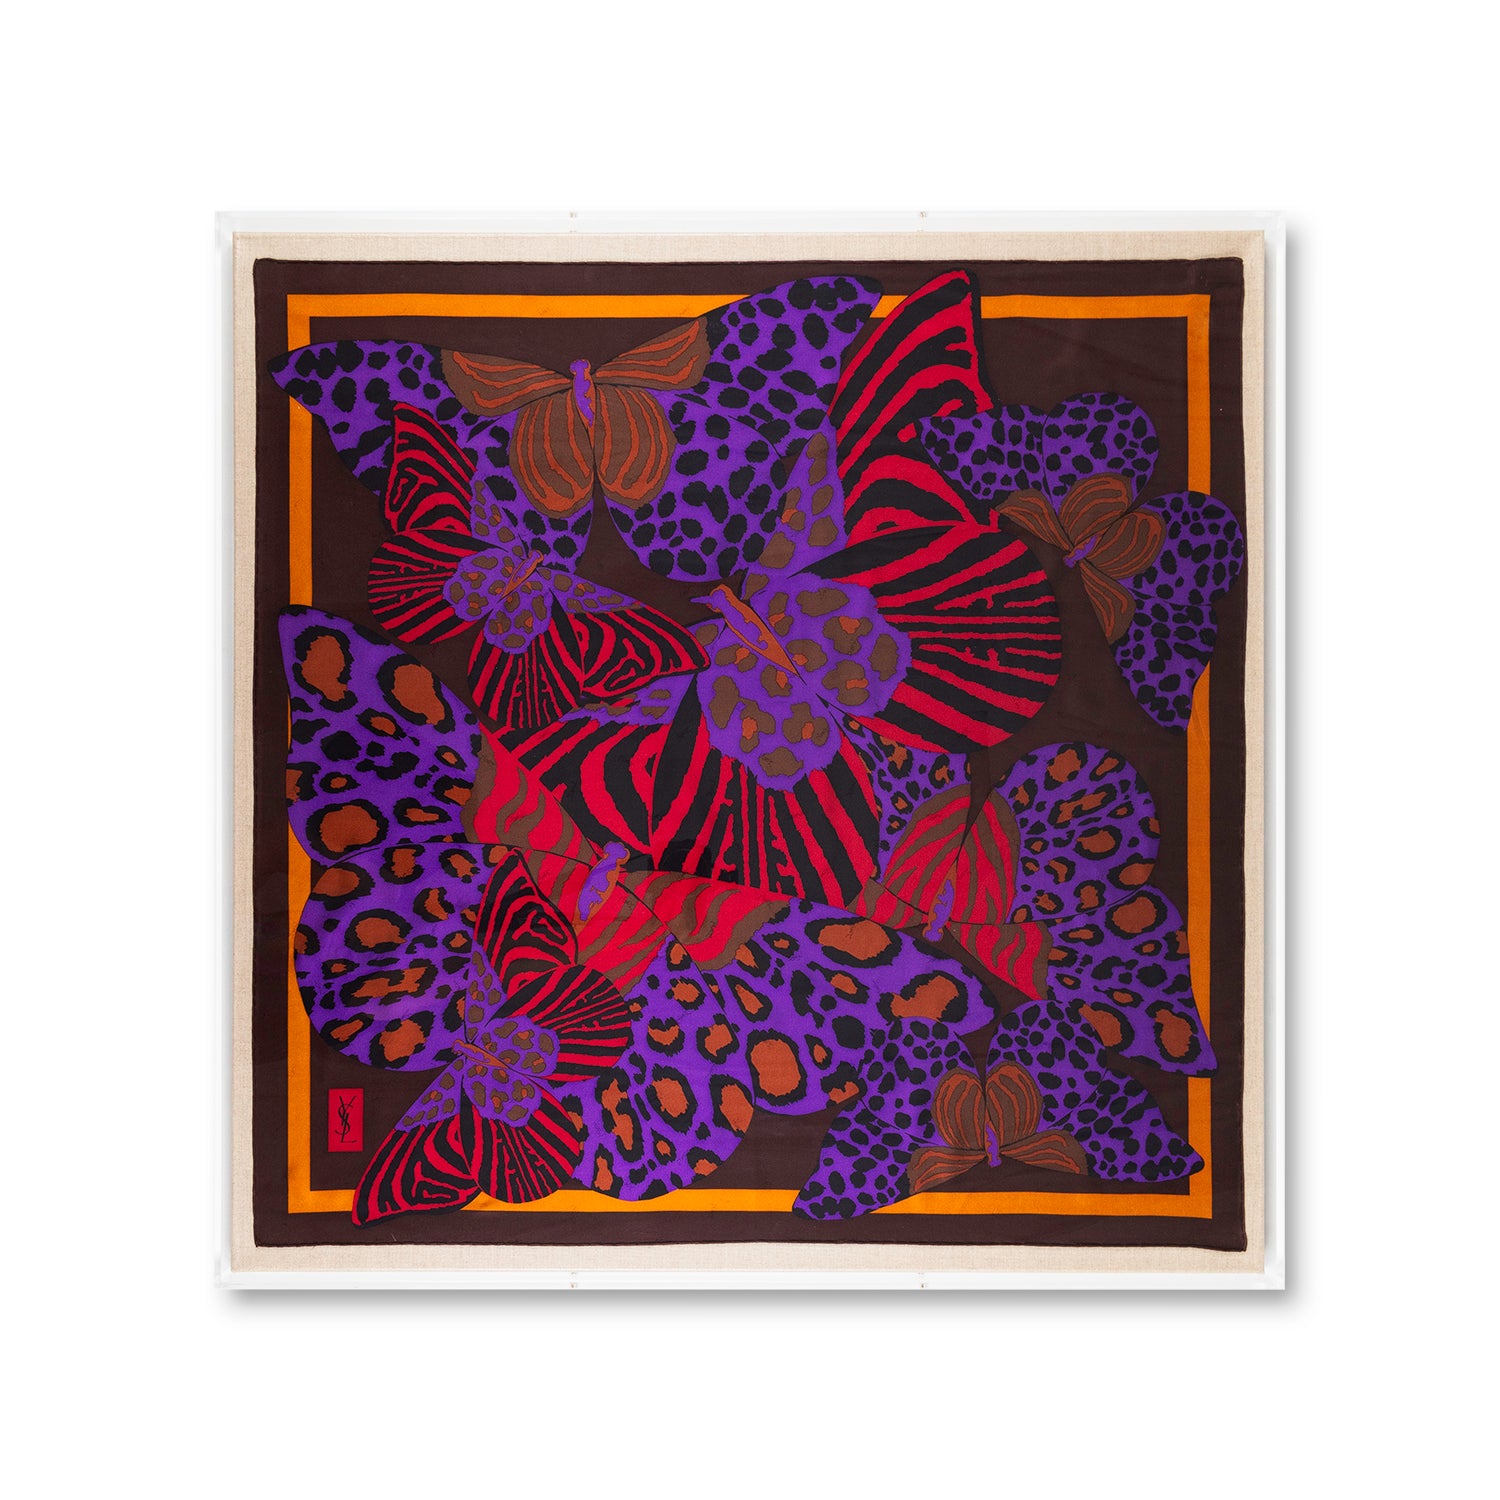 Framed Yves Saint Laurent Butterflies on Brown Silk Scarf in a 36x36x2